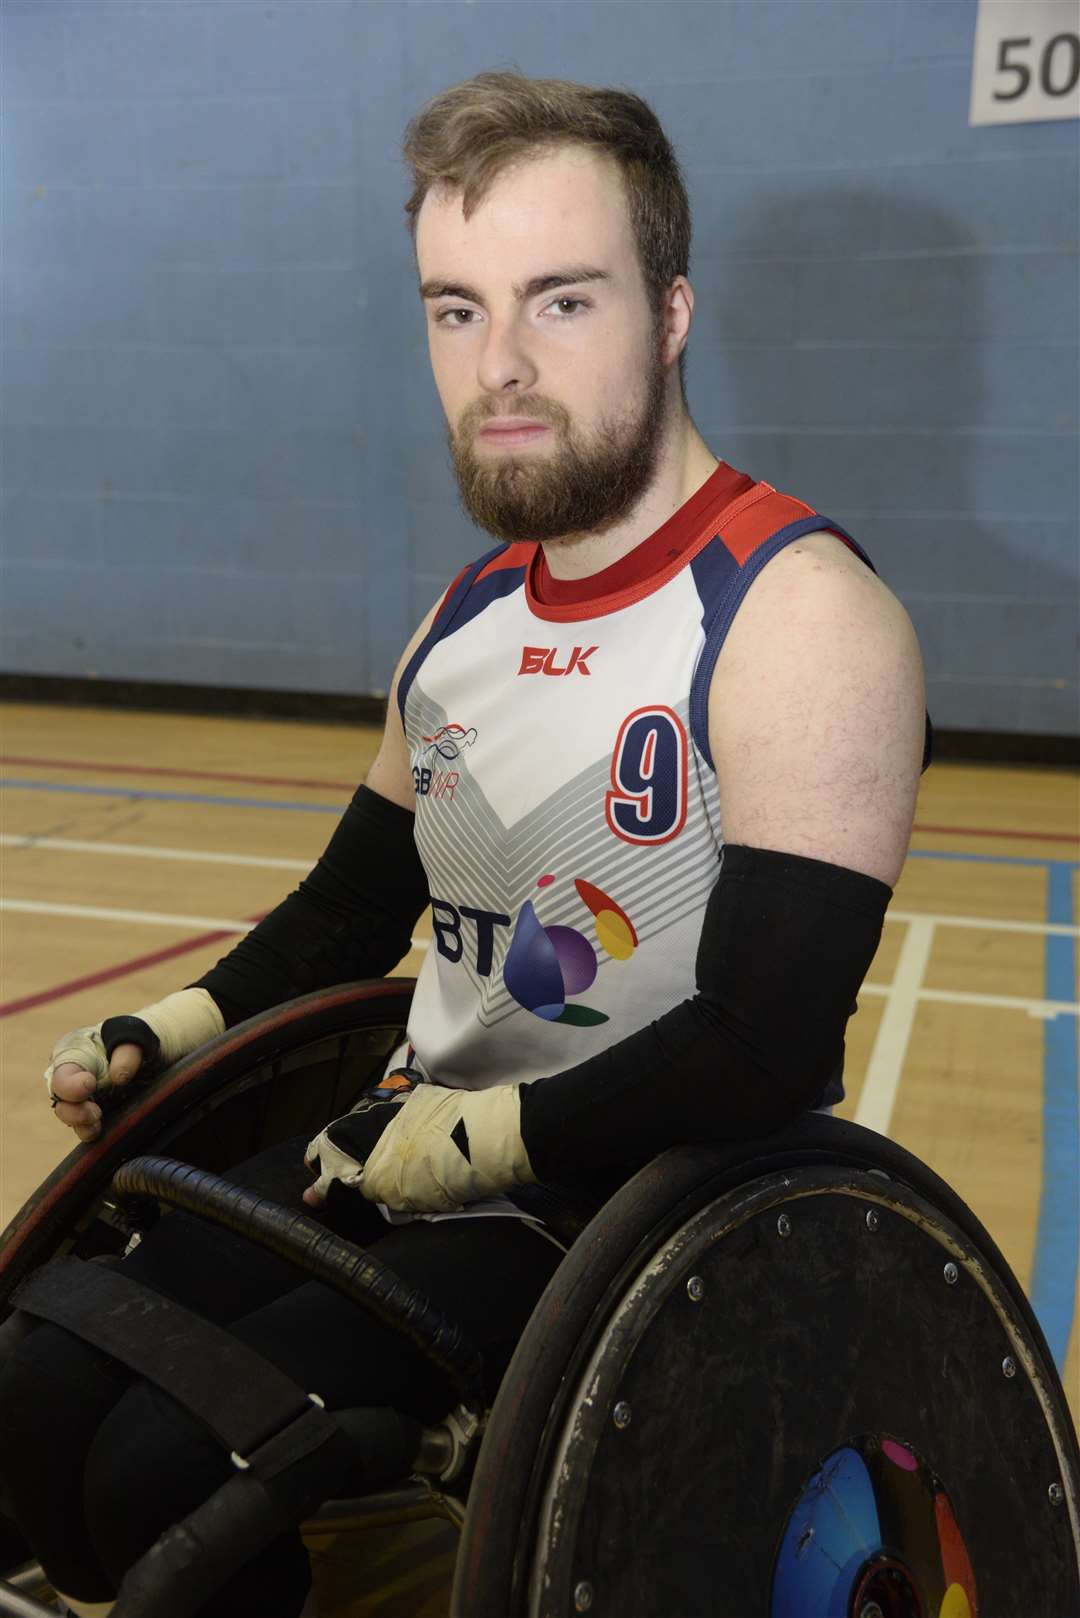 Team GB Wheelchair Rugby star Ollie Mangion